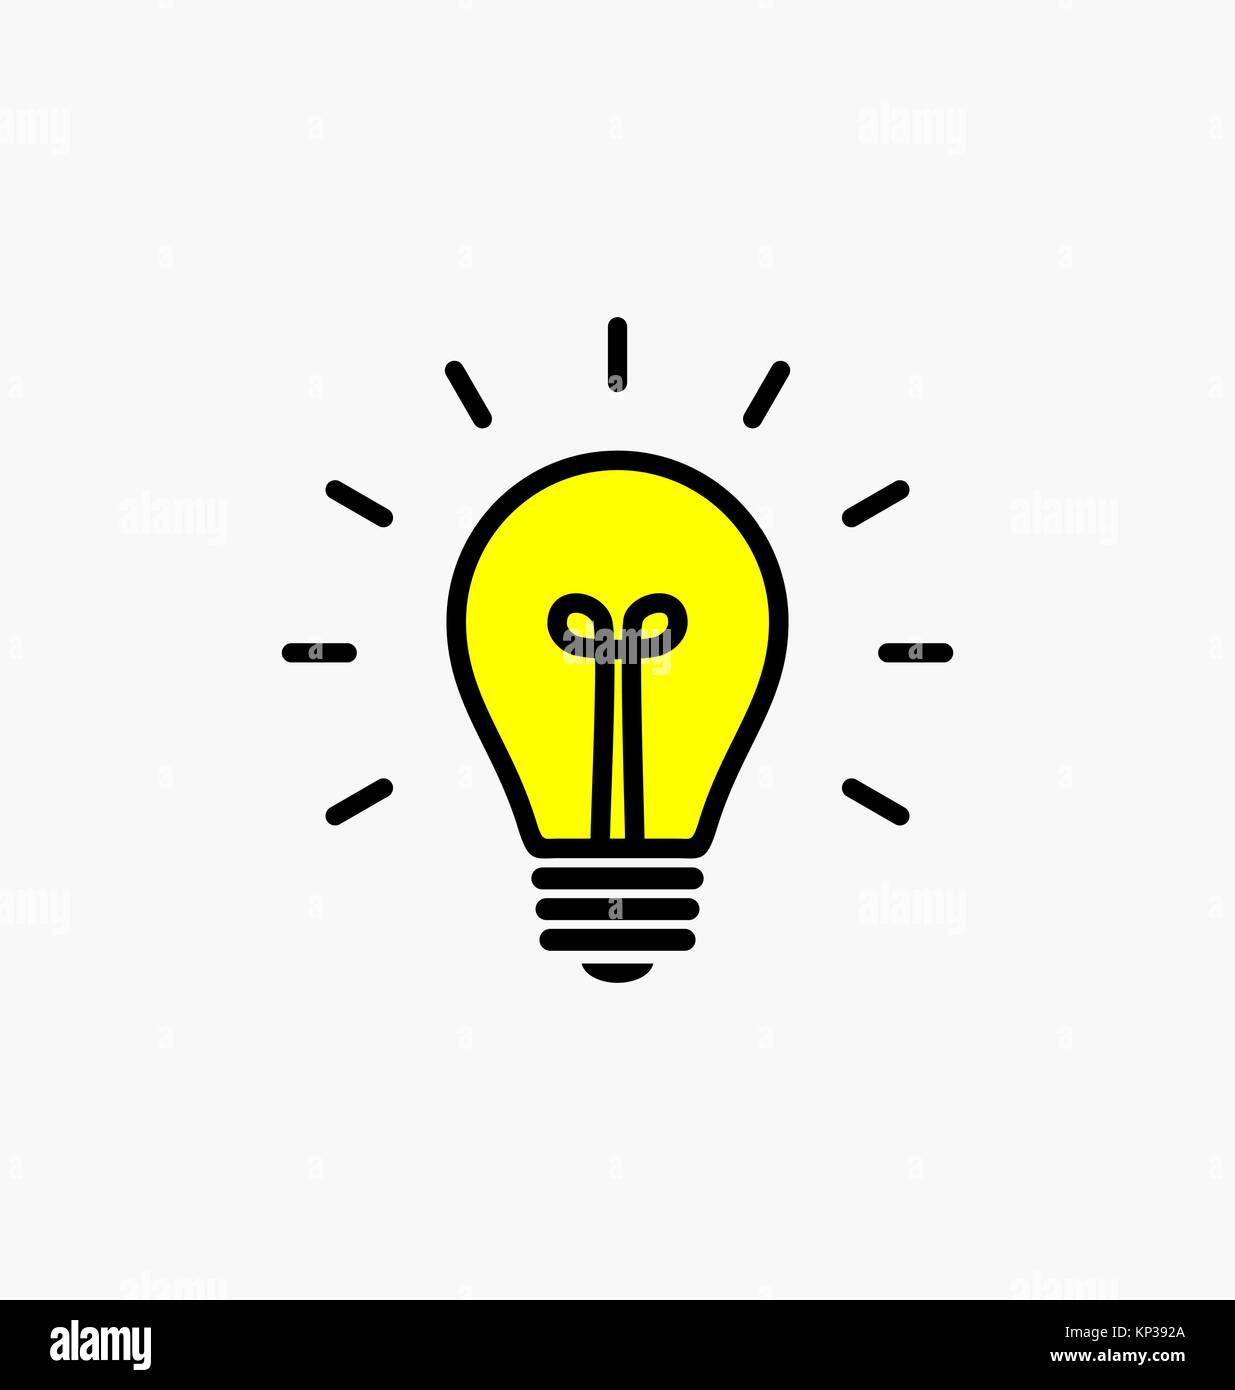 Vektor Lampensymbol mit Konzept der Idee. Brainstorming/Idee Abbildung. Stock Vektor